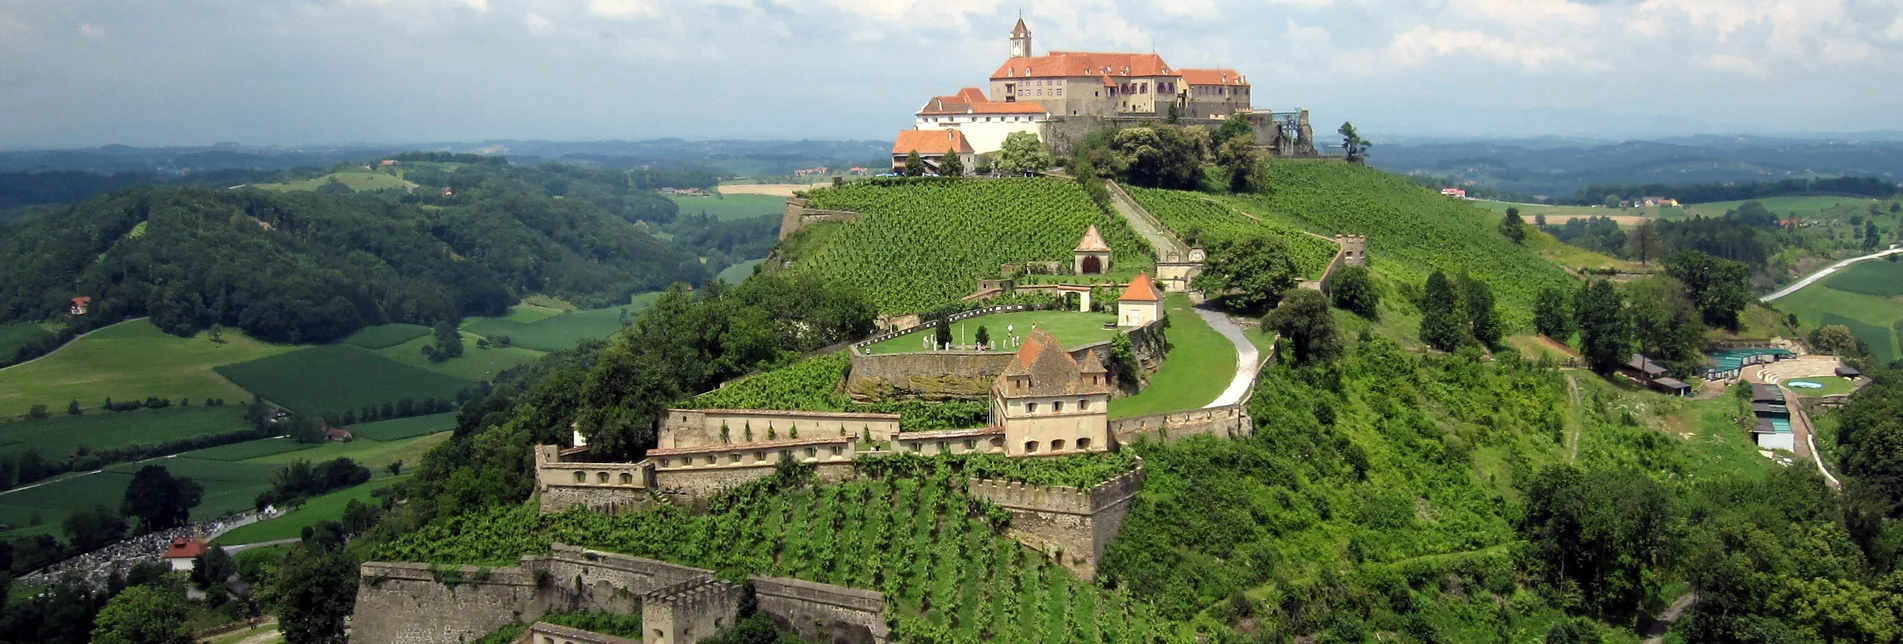 Complete view of the imposing Riegersburg Castle | © Thermen- & Vulkanland Steiermark | Harald Eisenberger